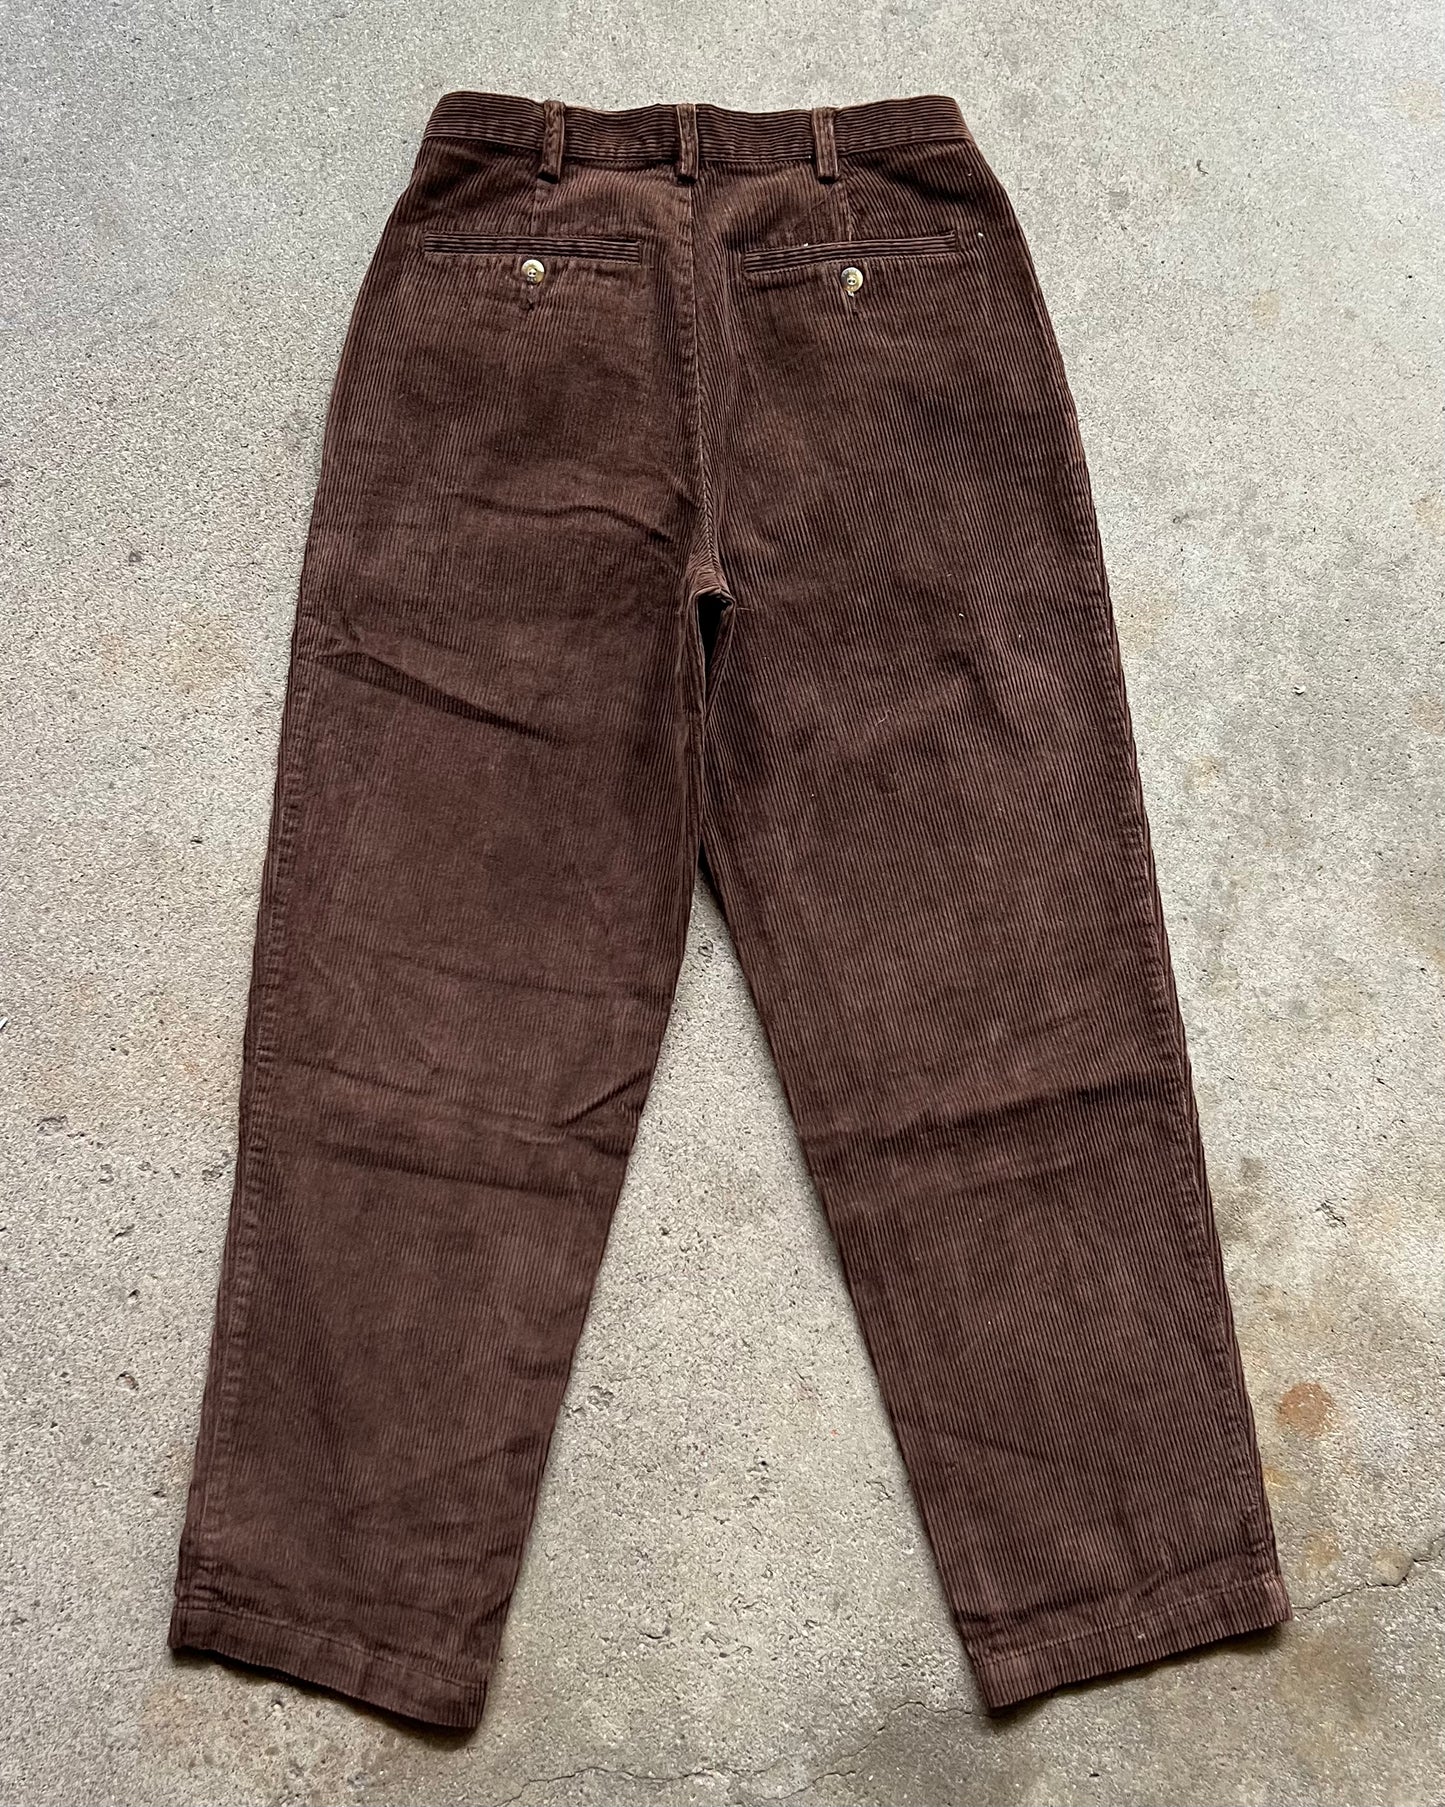 1990's Trader Bay Corduroy Pants